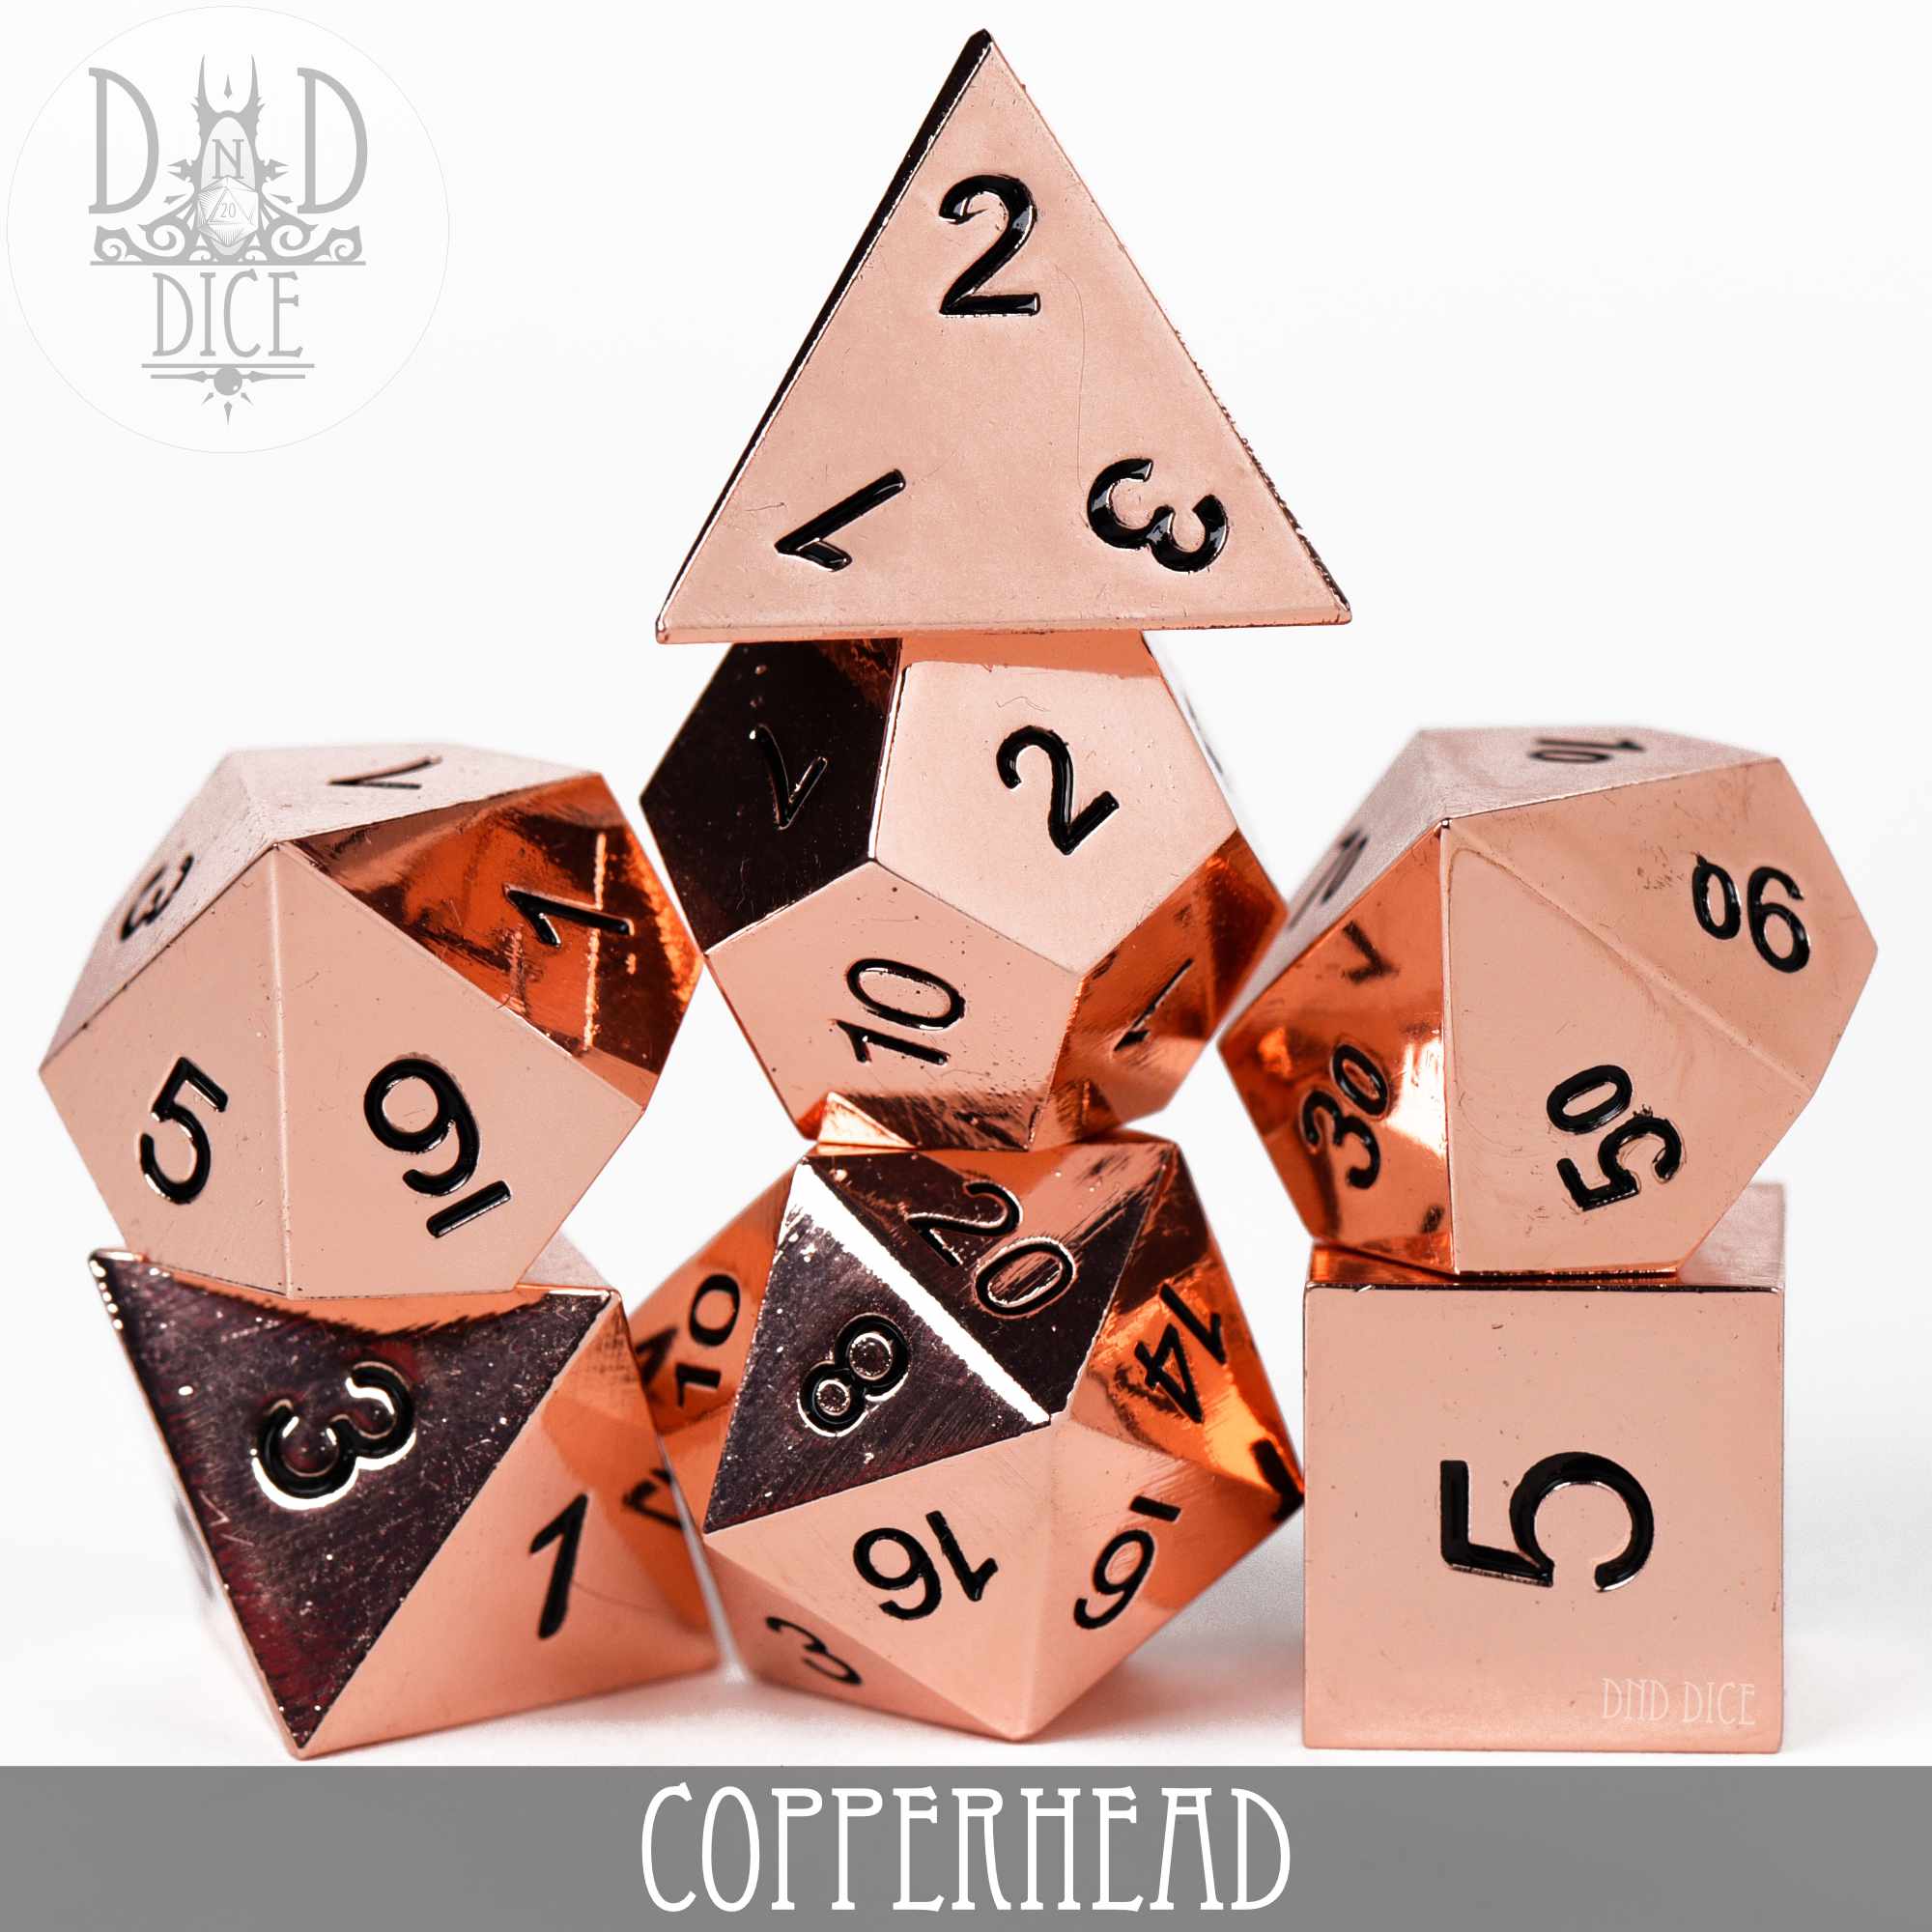 Copperhead Metal Dice Set